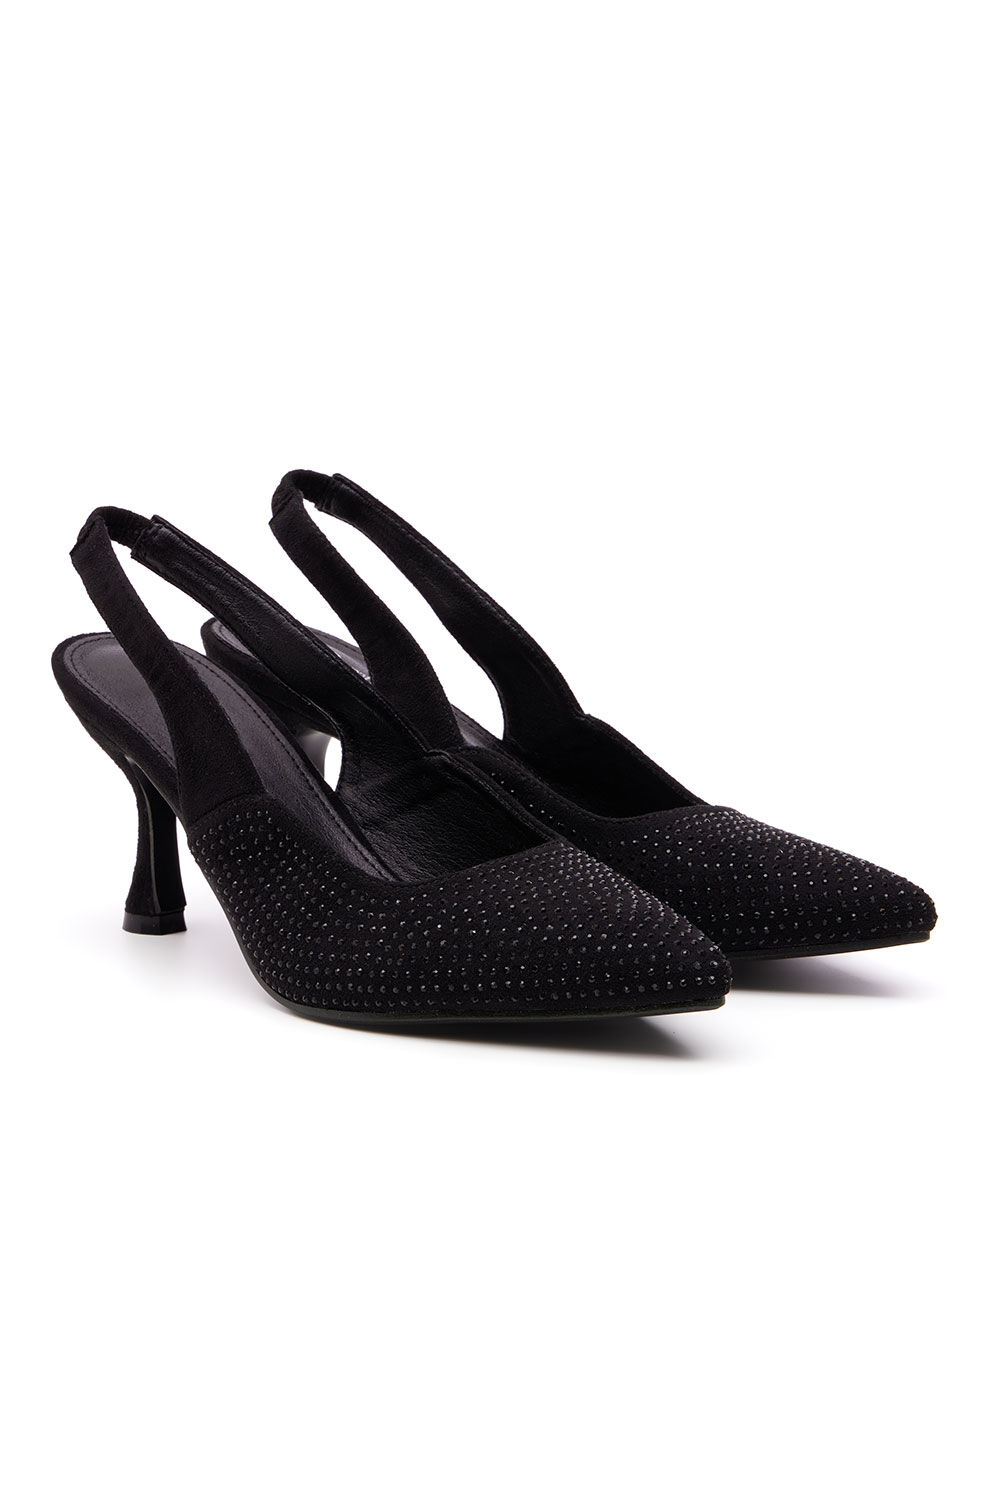 Comfort Plus Black - Strap Design Heels With Diamante Detail, Size: 3